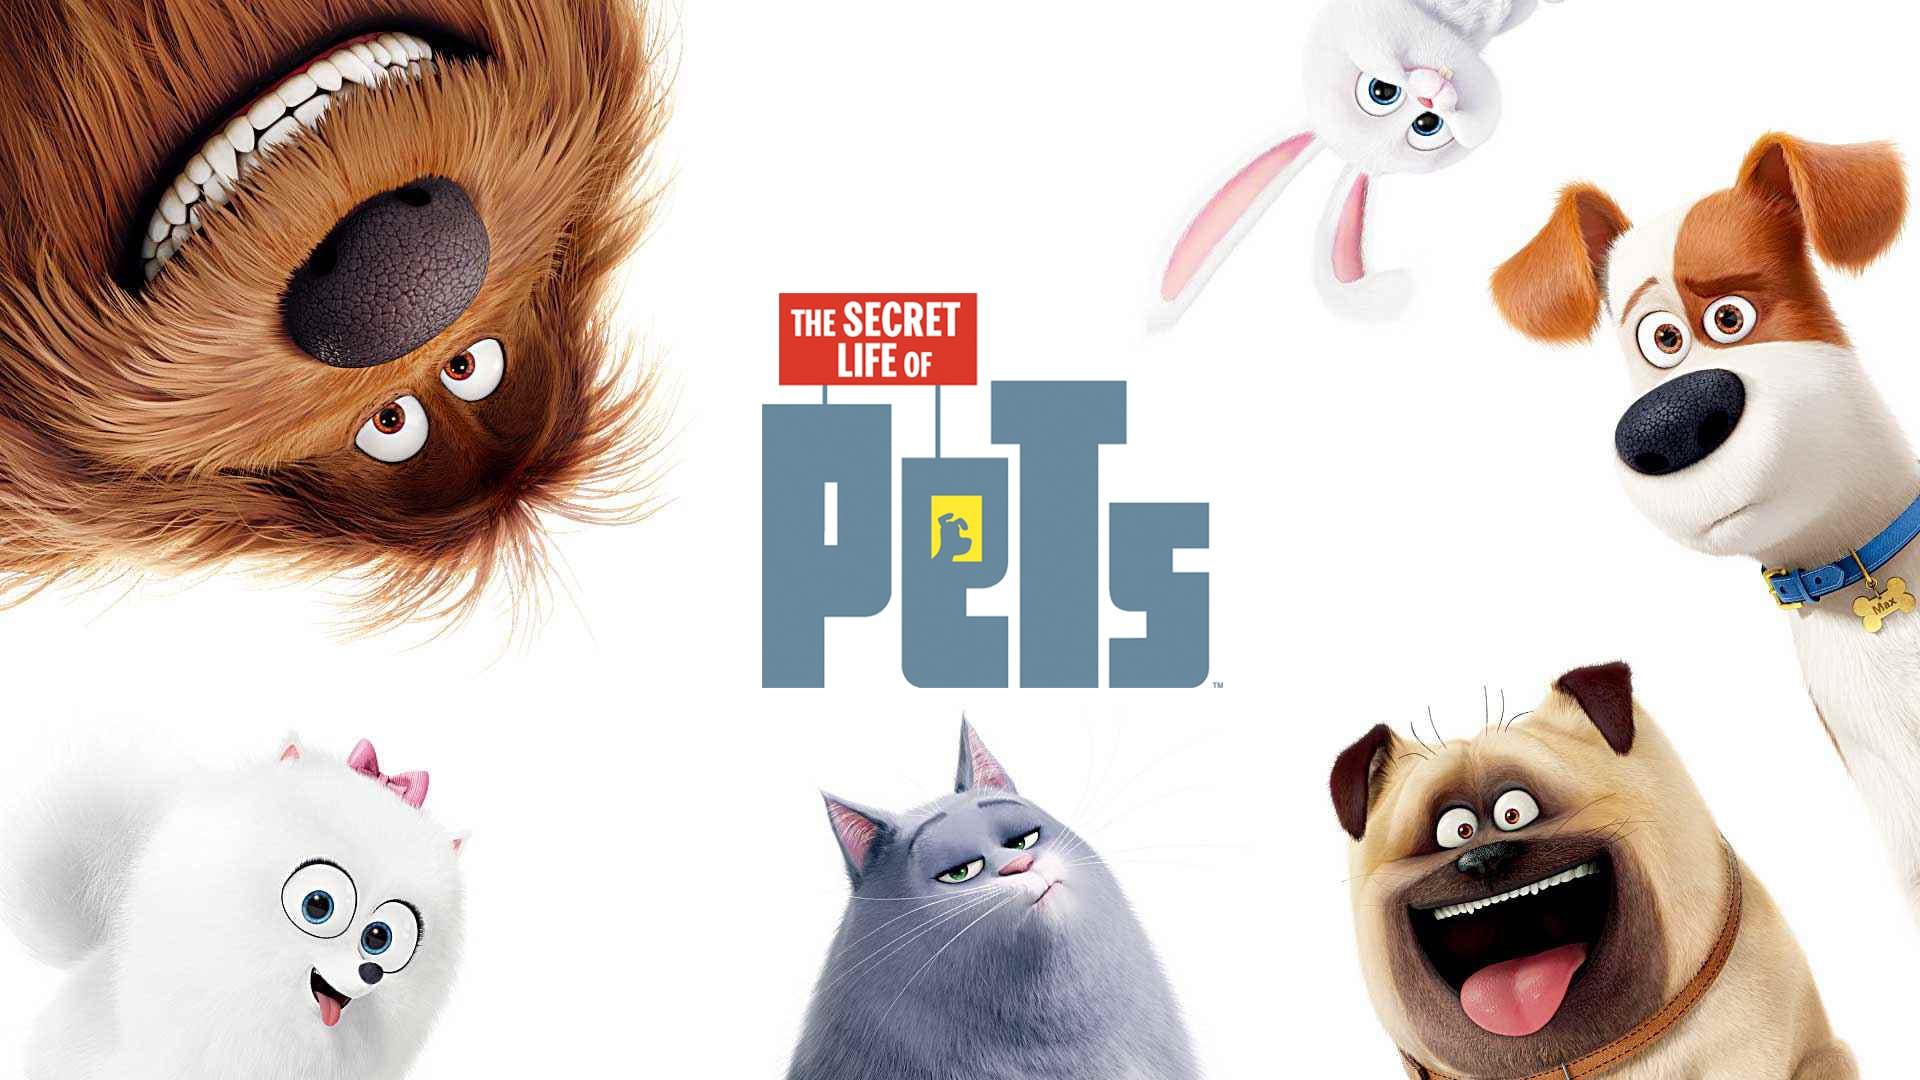 the secret life of pets 2 cast full movie free